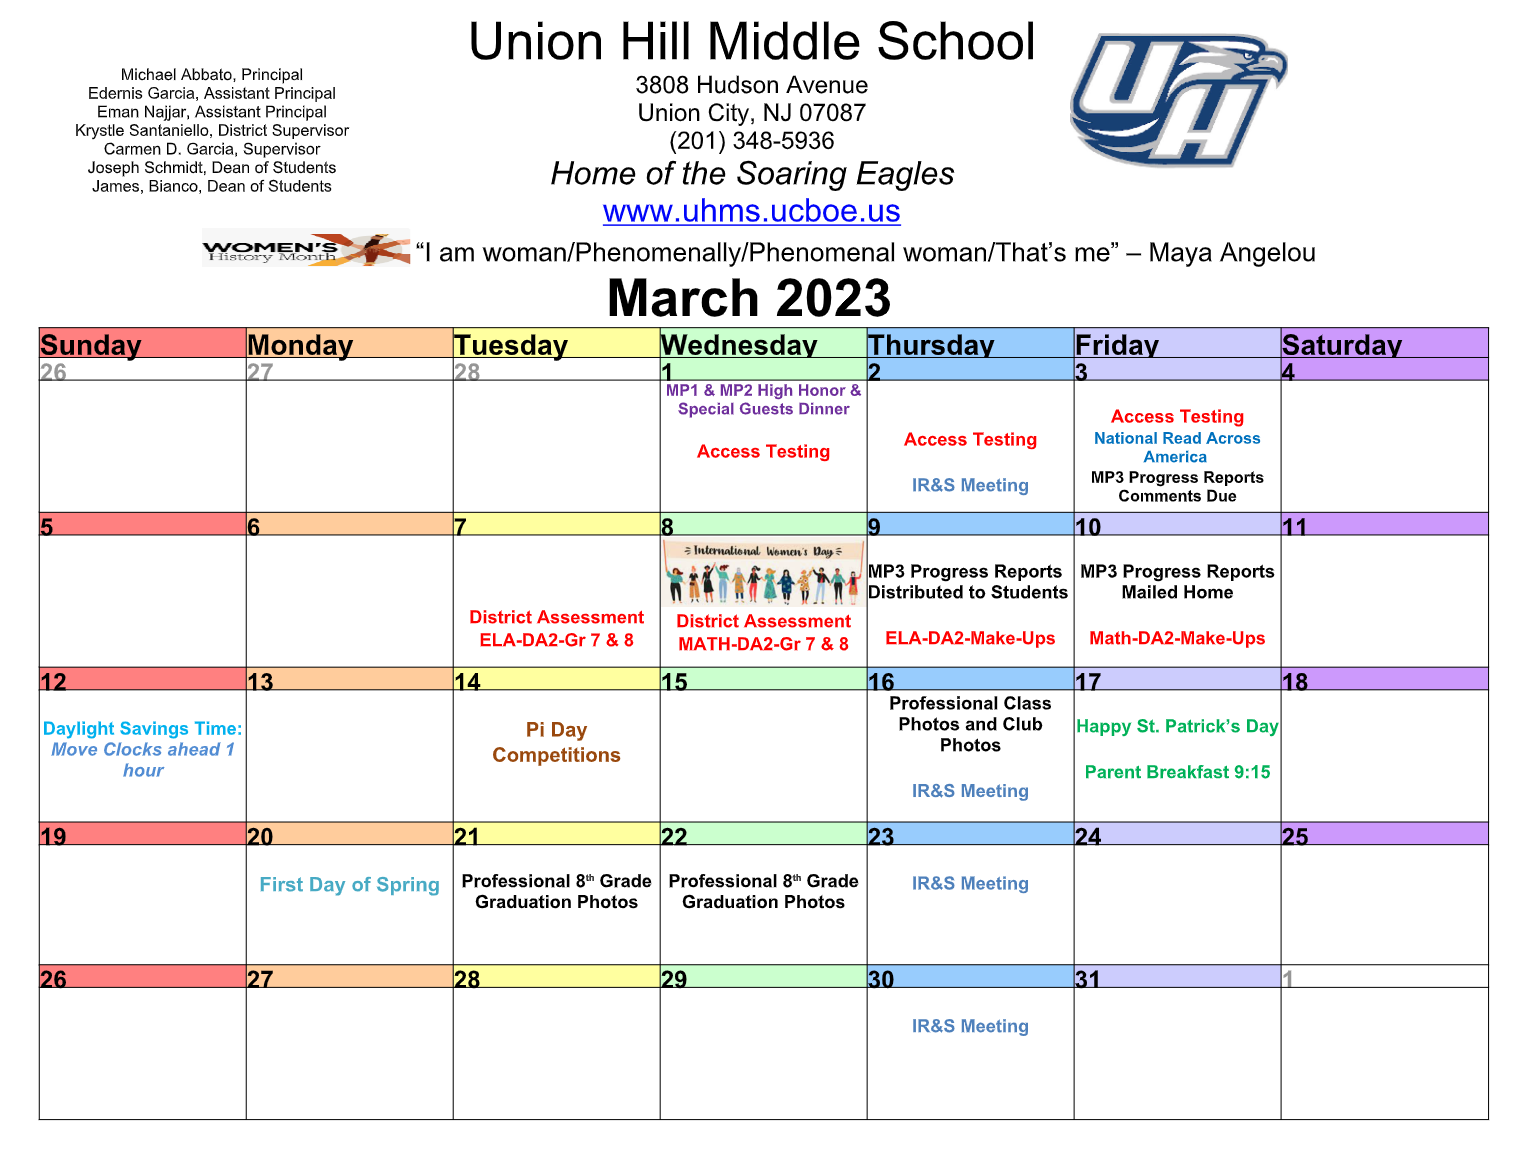 March 2023 Calendar-Union Hill Middle School